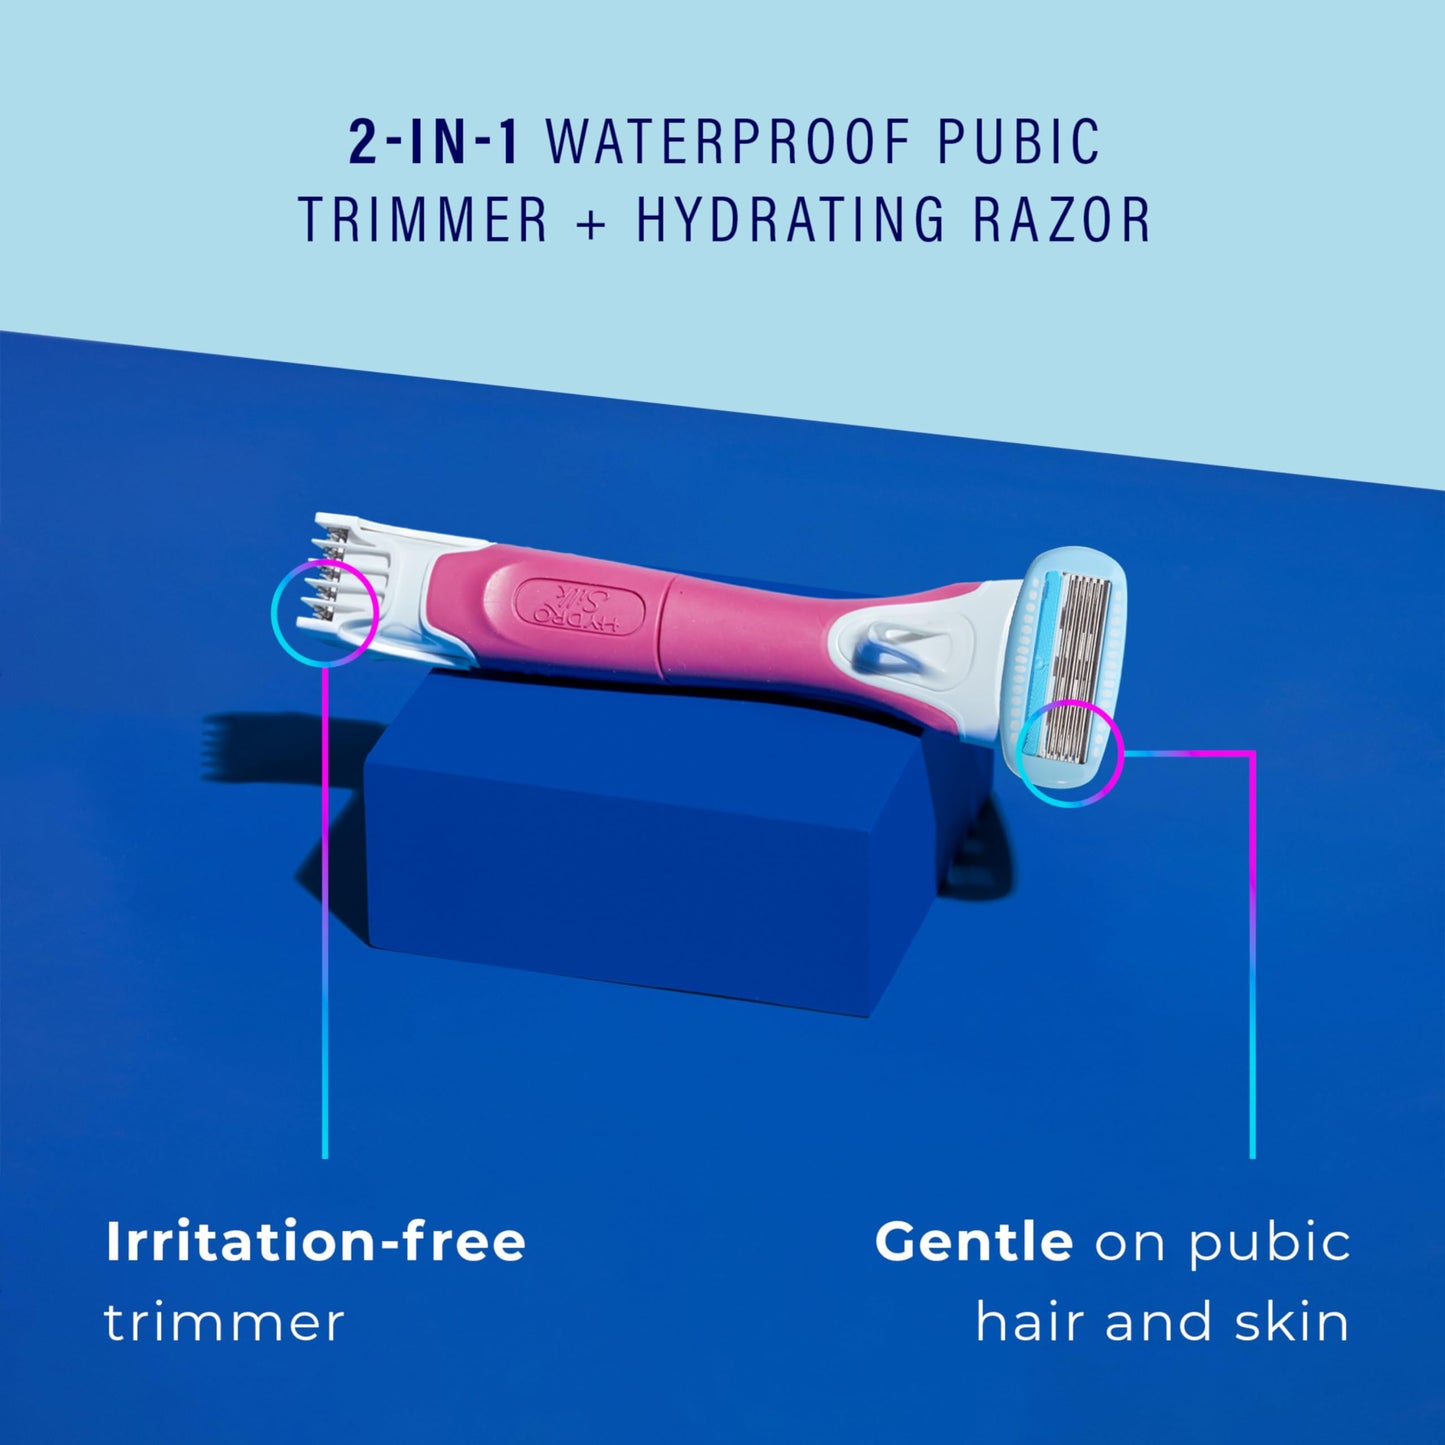 Schick Hydro Silk TrimStyle Razor for Women with Bikini Trimmer | 5-Blade Womens Razor with Trimmer, 2-in-1 Waterproof Pubic Hair Trimmer & Razor | 1 Handle & 3 Razor Blade Refills